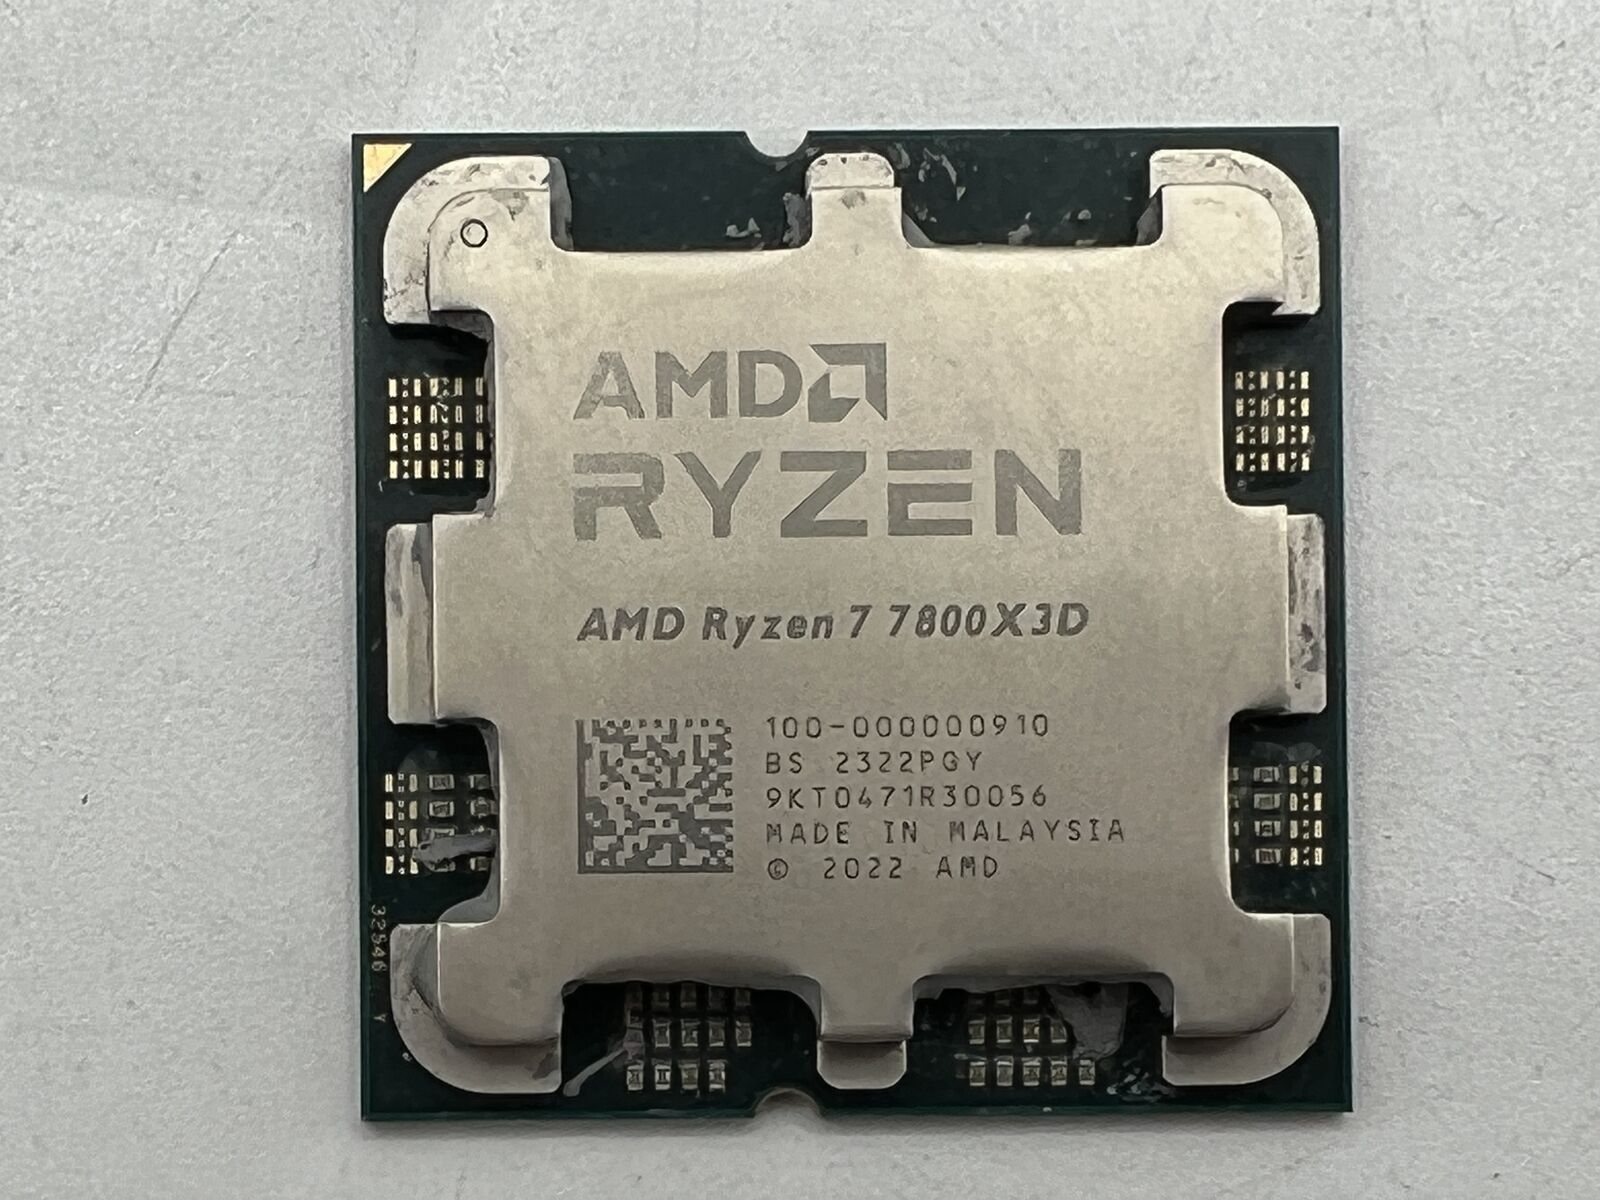 AMD Ryzen 7 7800X3D 4.2GHz 8 Core 16 Thread Gaming Desktop Processor Used